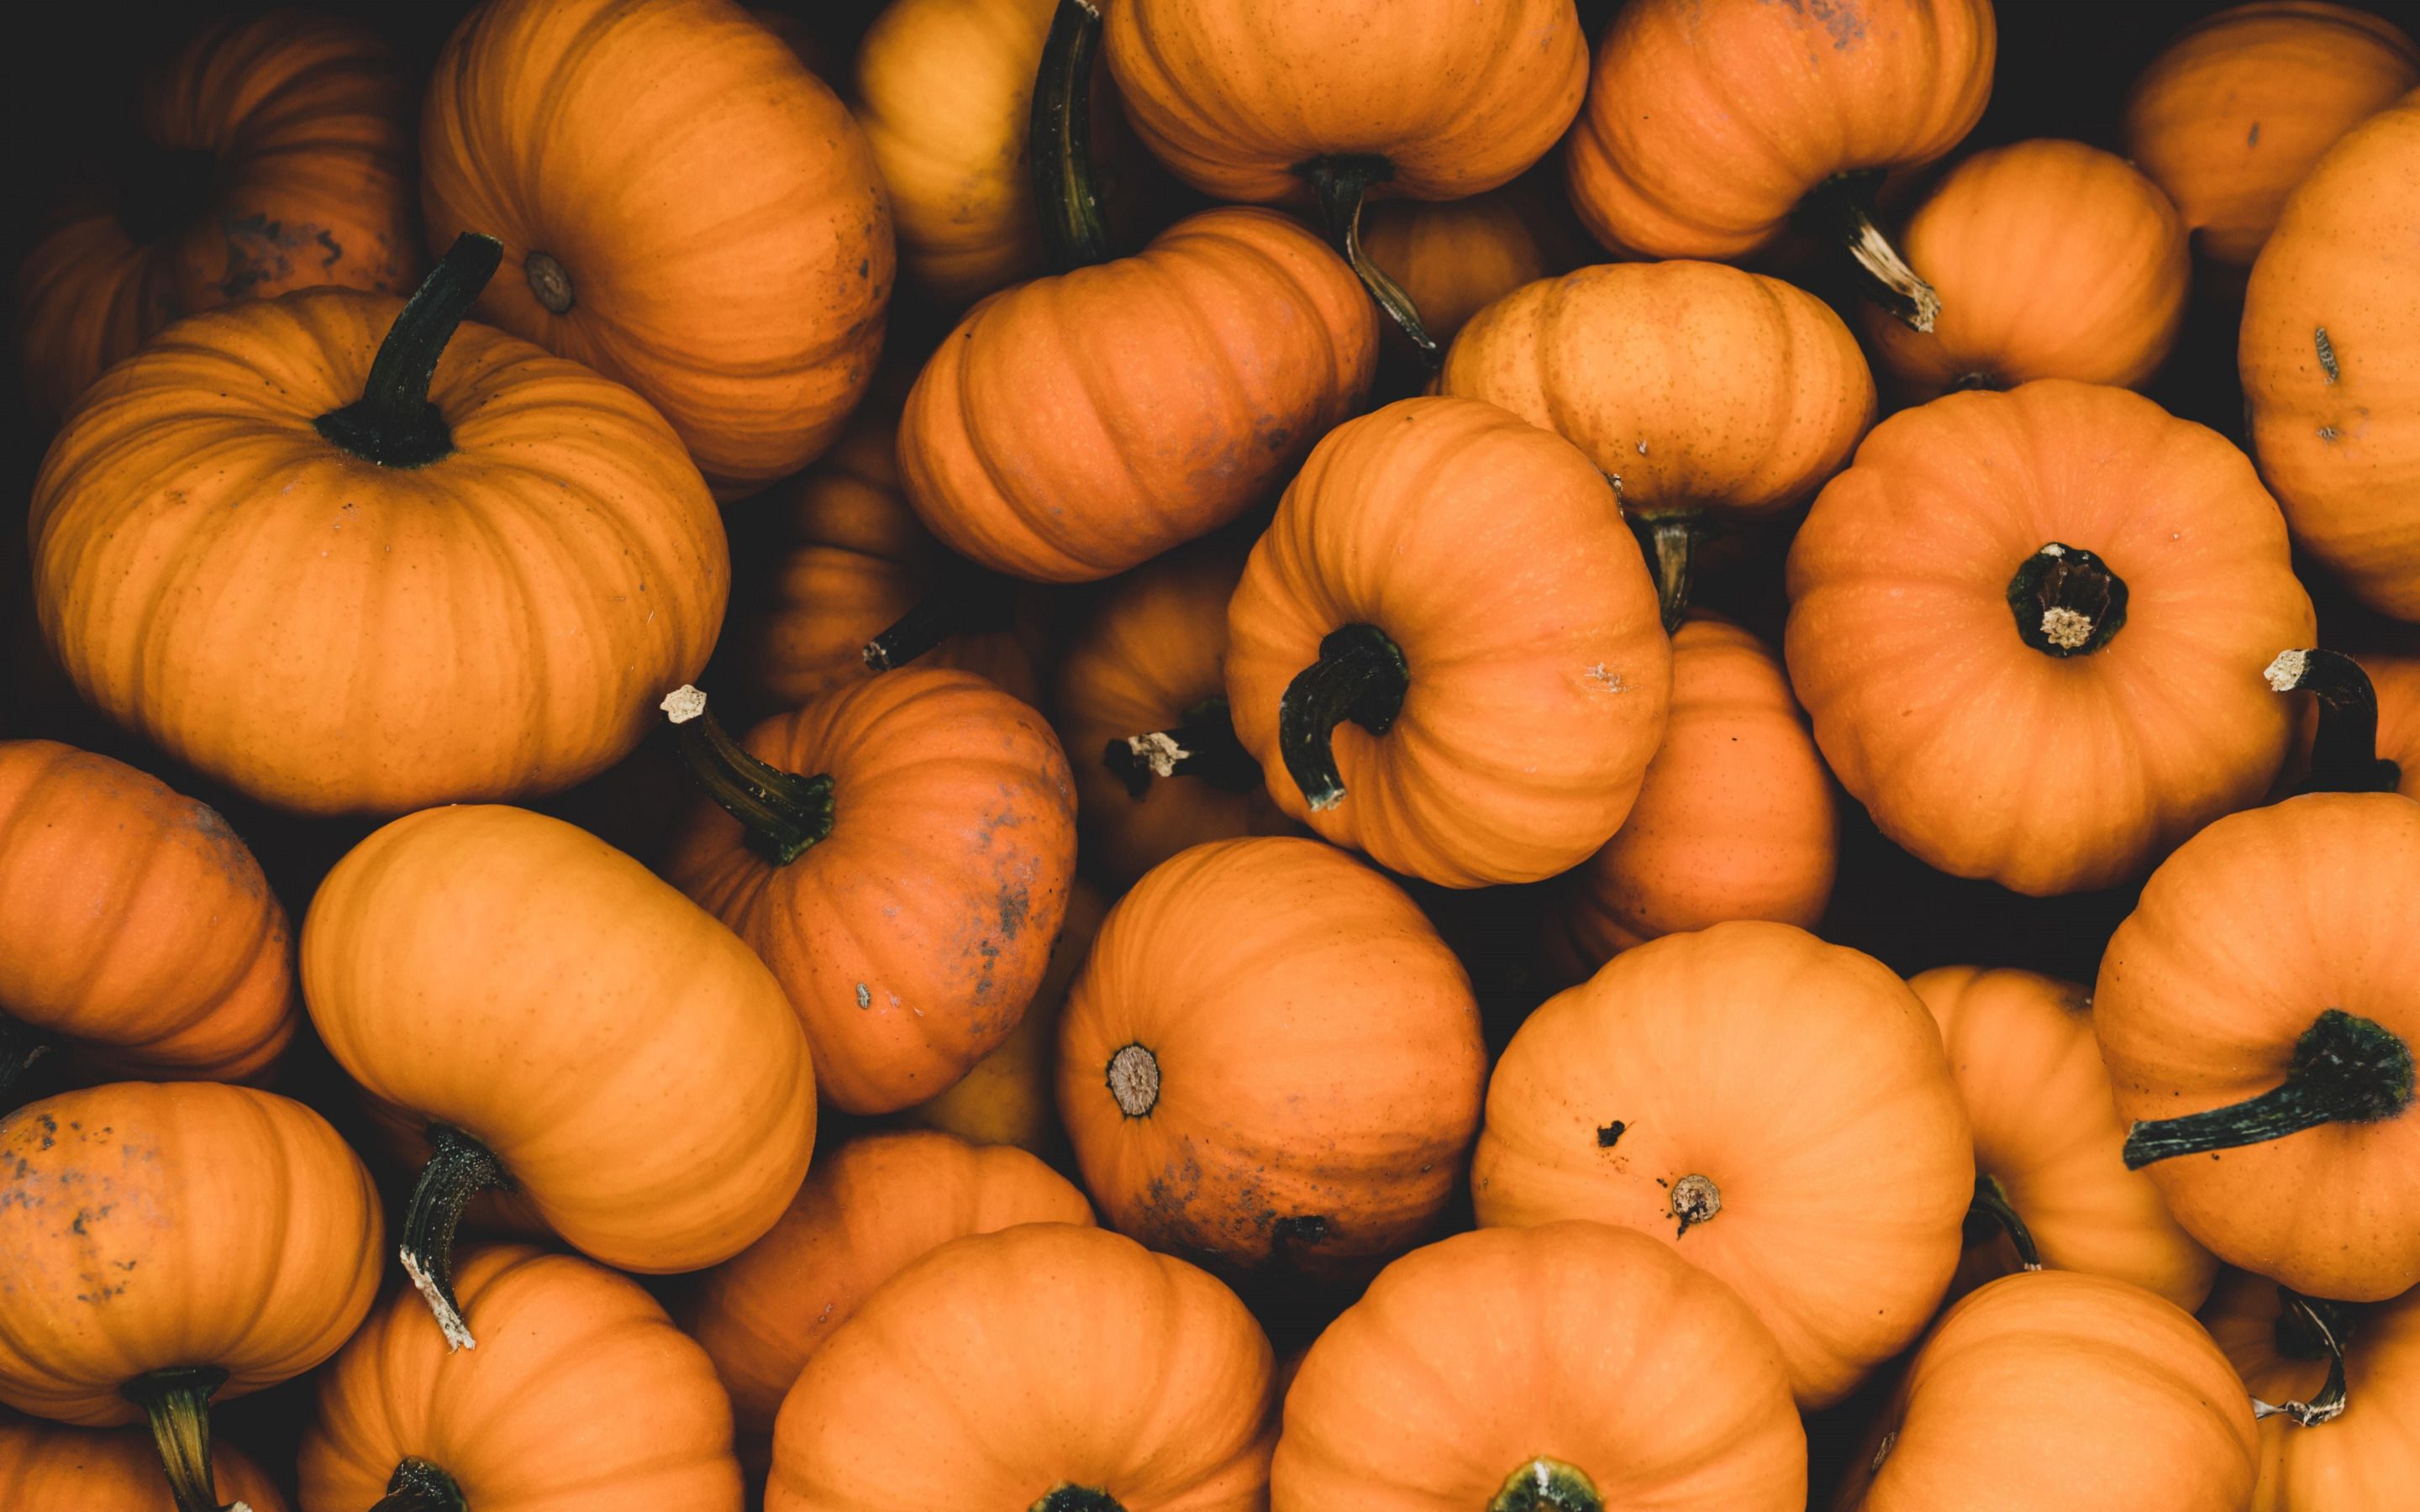 Download wallpaper Orange pumpkins, harvest, background with pumpkins, halloween, autumn harvest, pumpkins for desktop with resolution 2880x1800. High Quality HD picture wallpaper